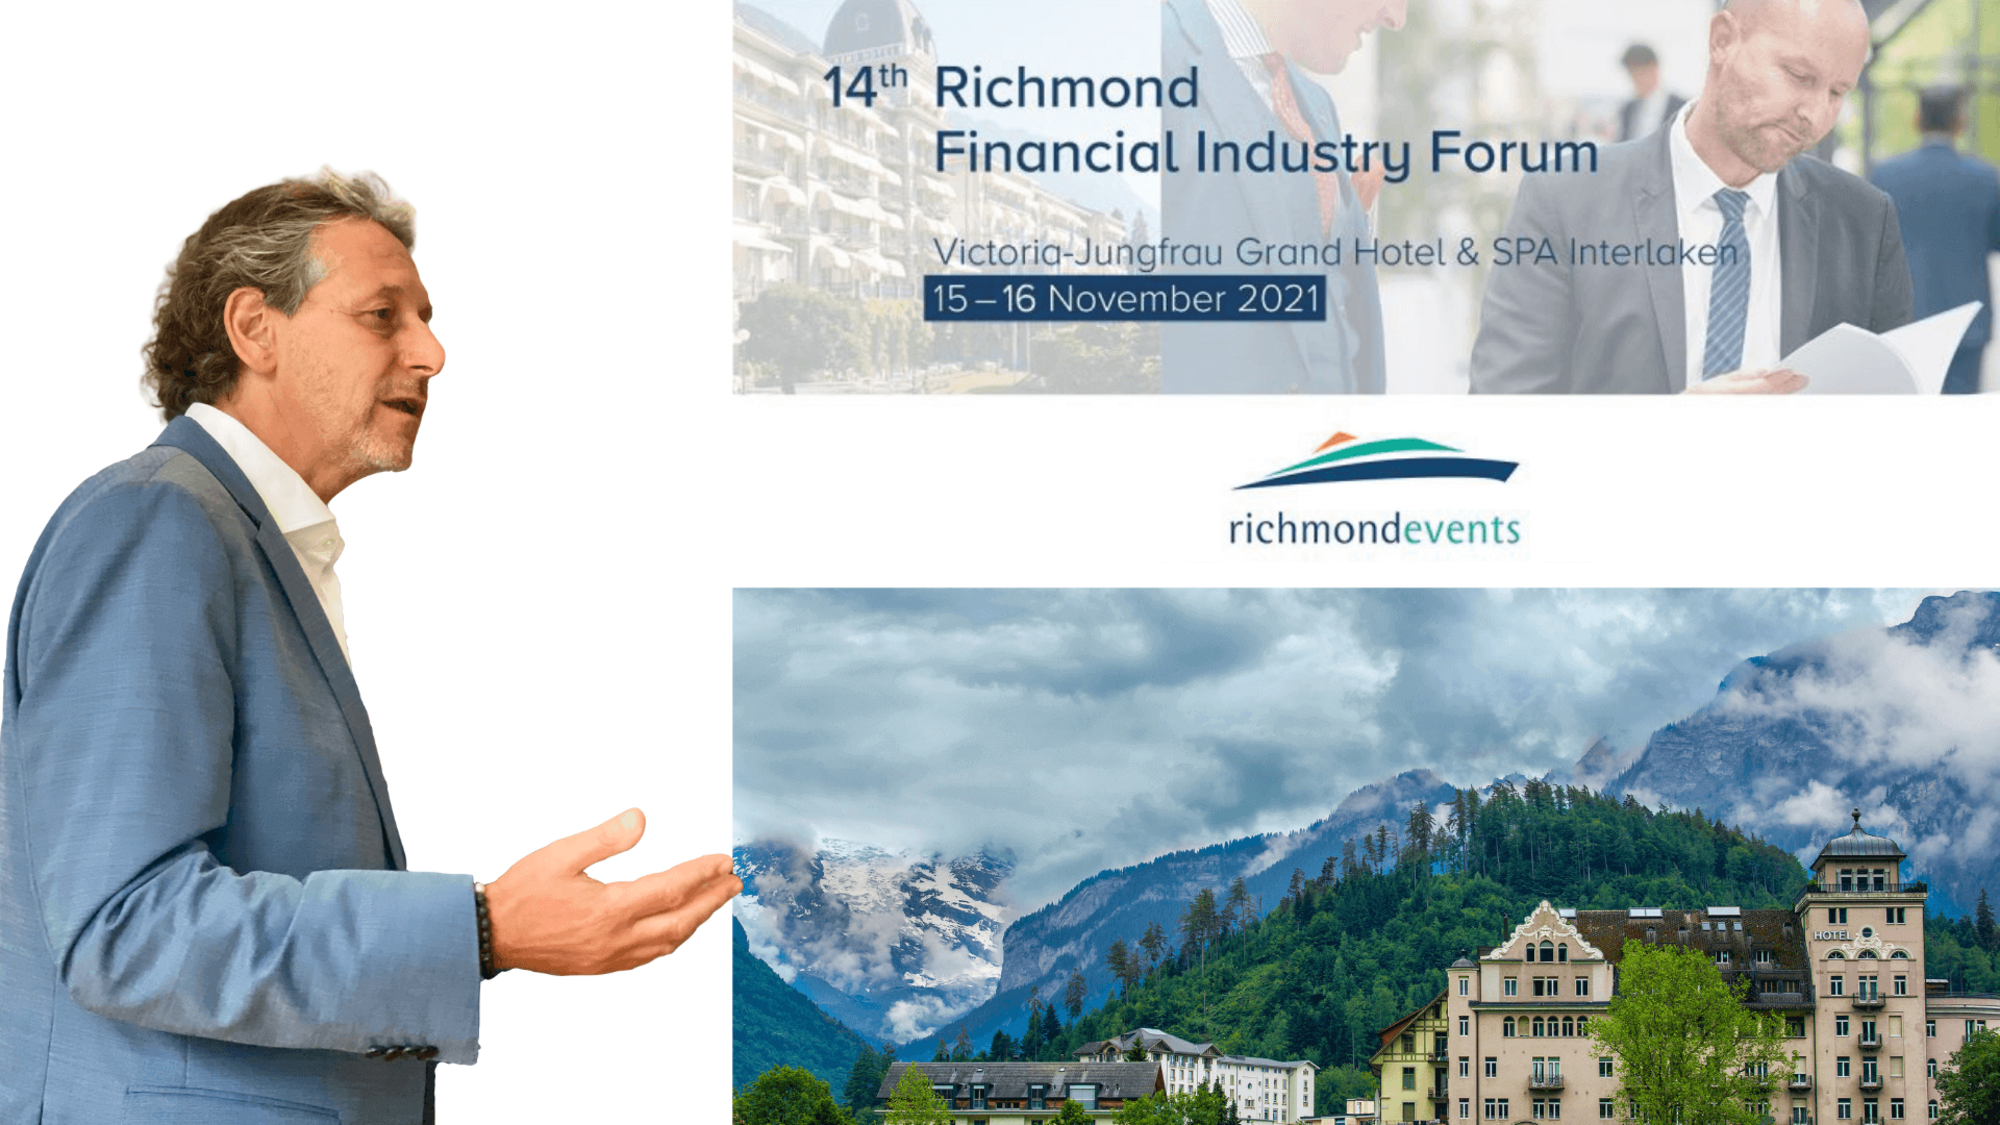 InCore Bank am 14. Richmond Financial Industry Forum in Interlaken 2021